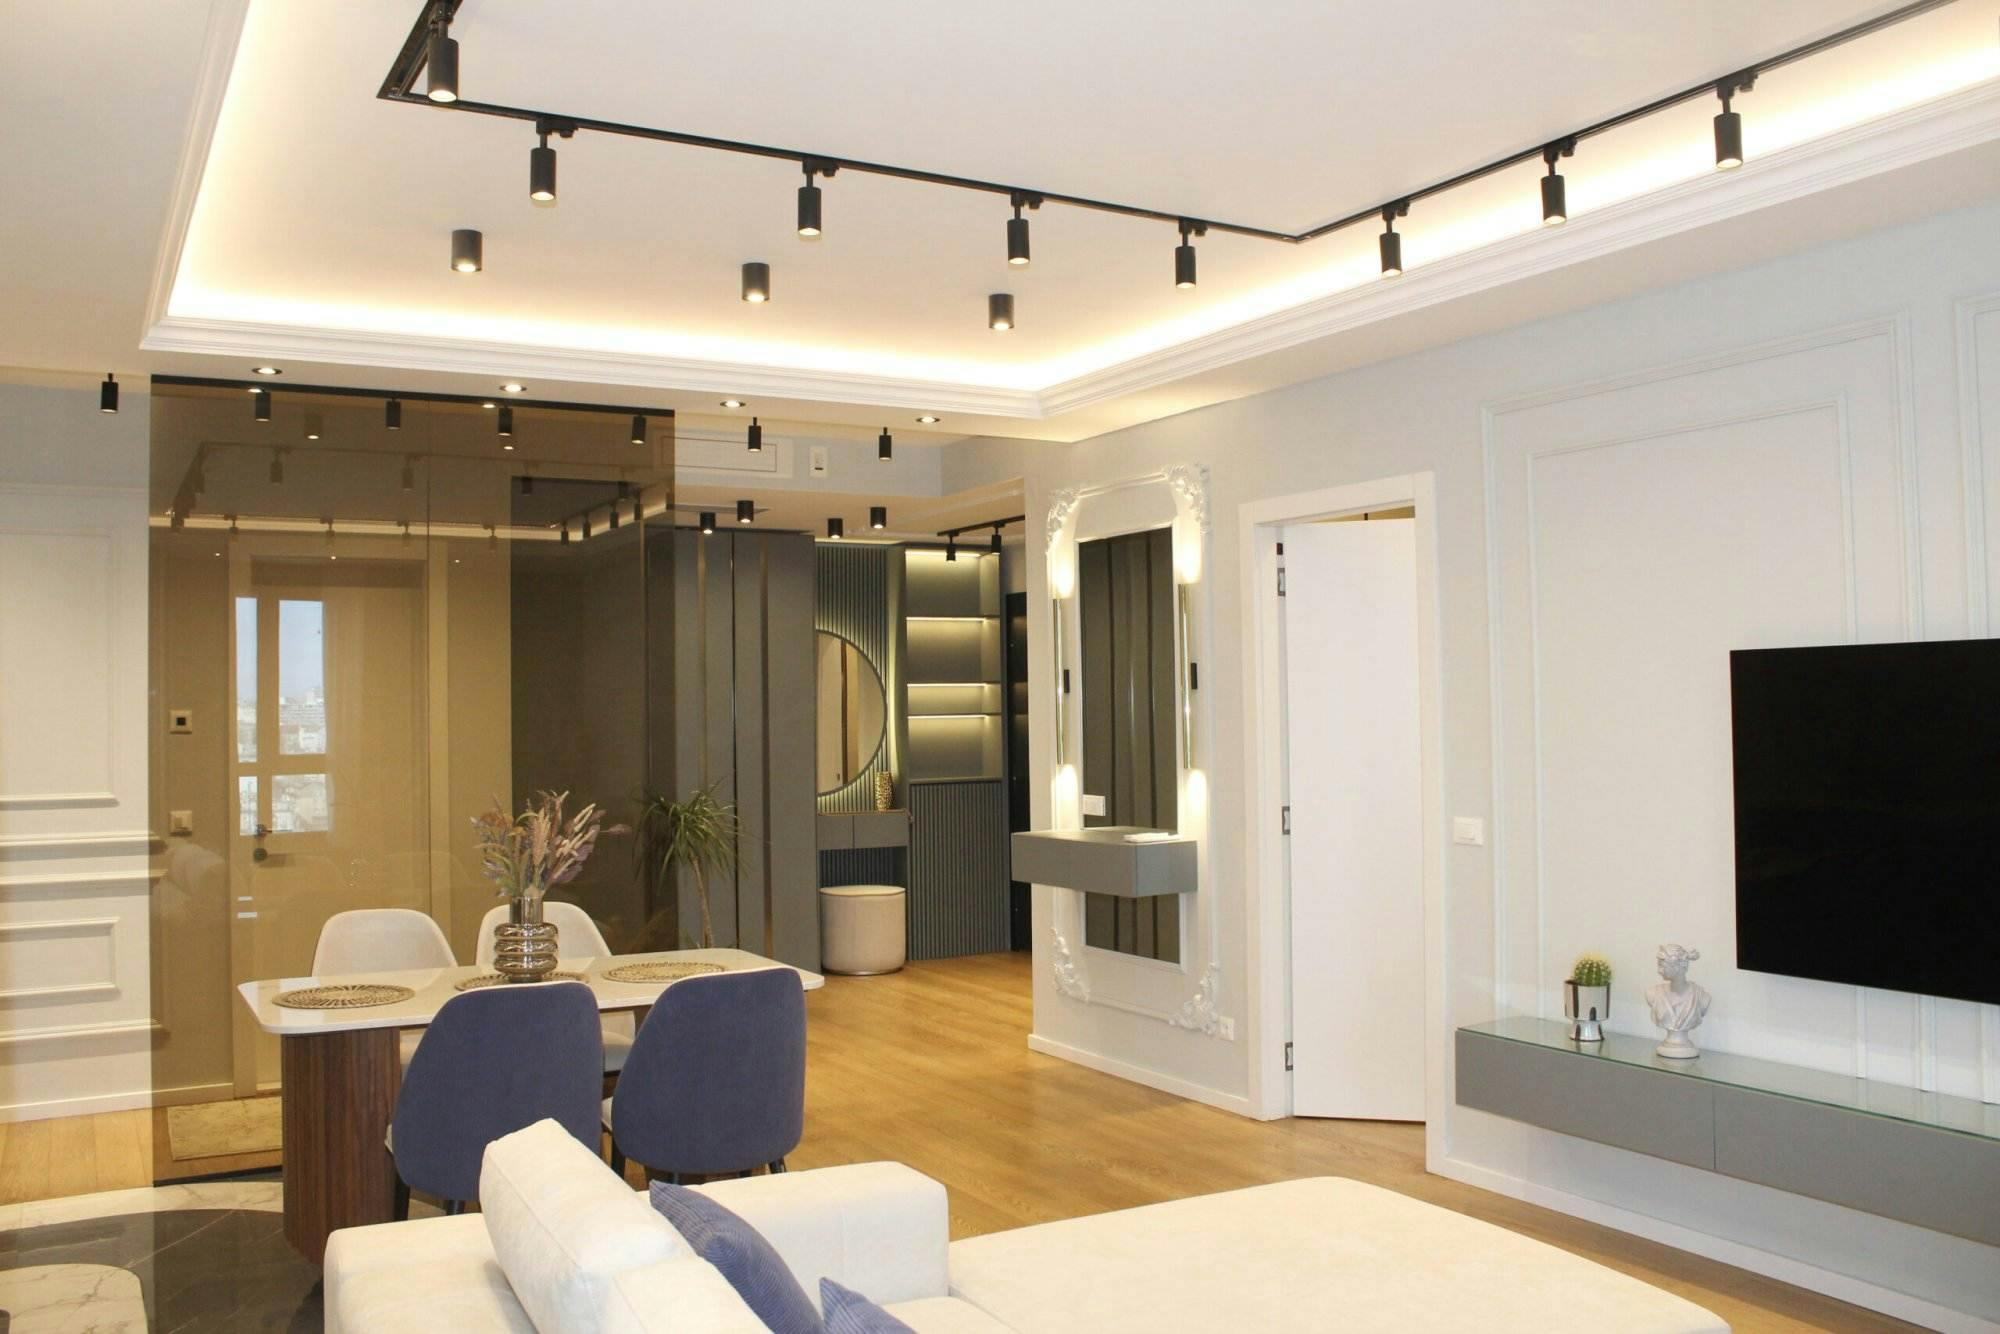 Three-bedroom luxury apartment in the Skyline building